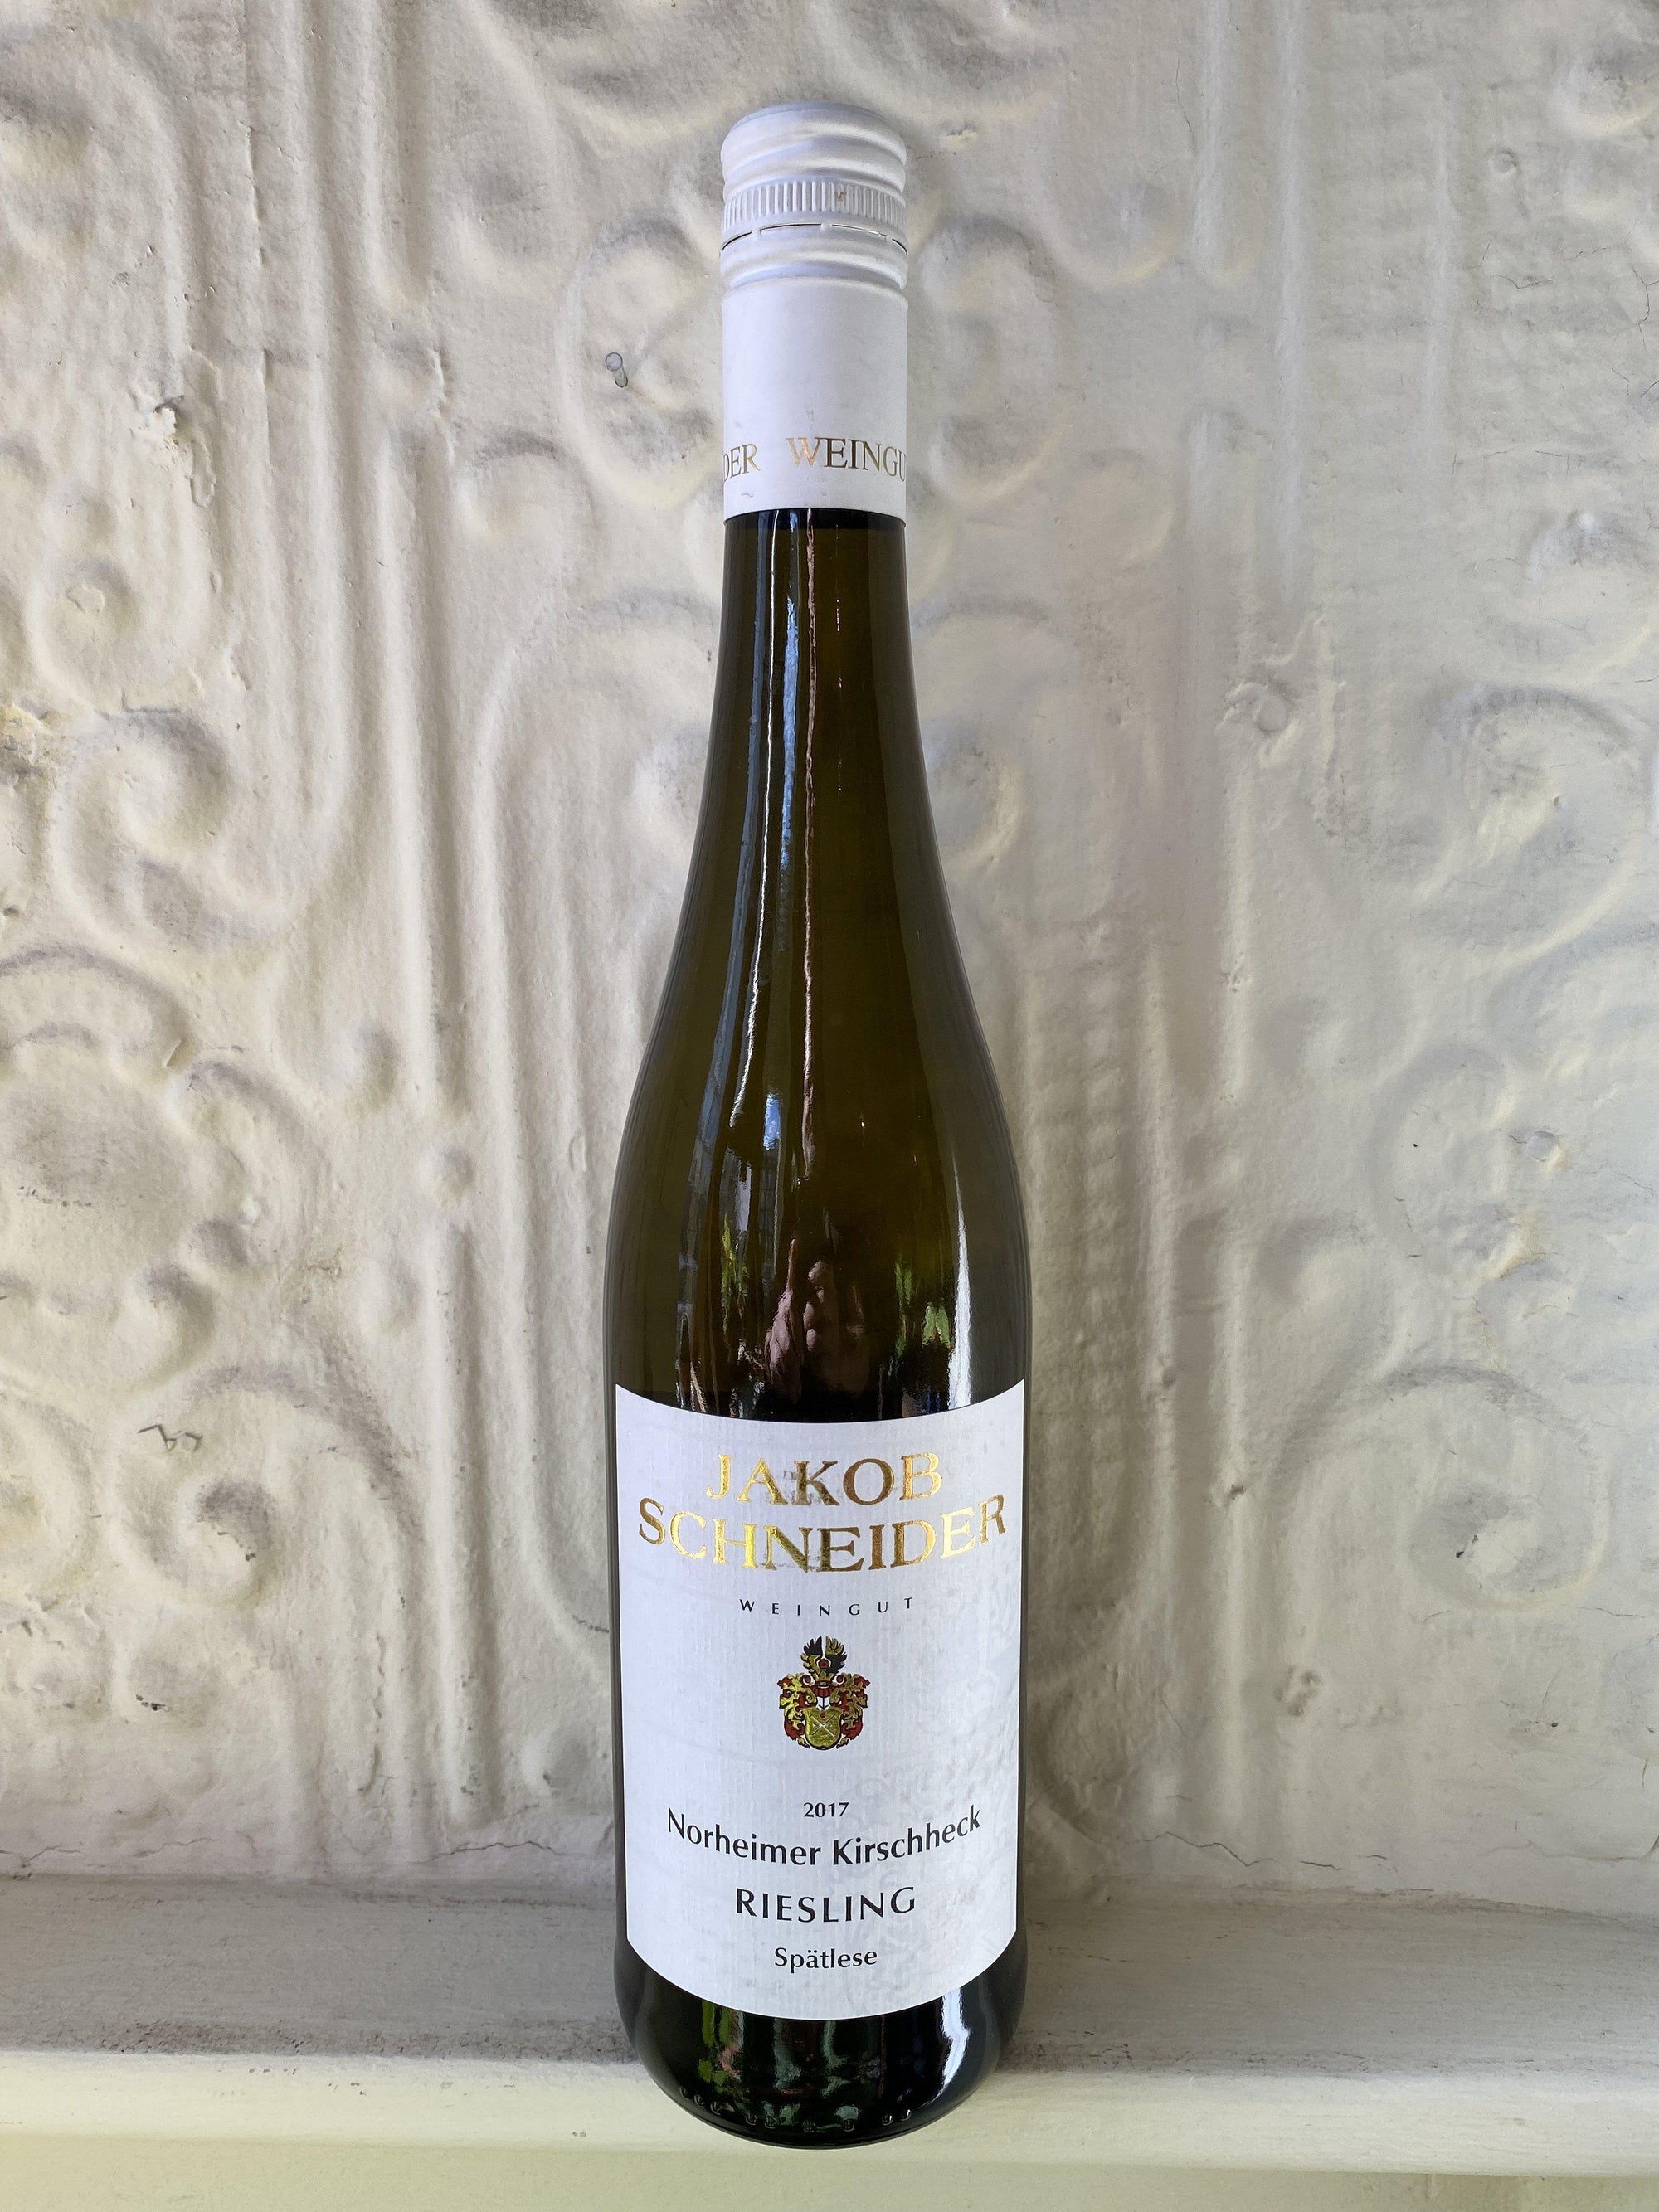 Riesling Spatlese Norheim Kirschheck, Jakob Schneider 2017 (Nahe, Germany)-Wine-Bibber & Bell